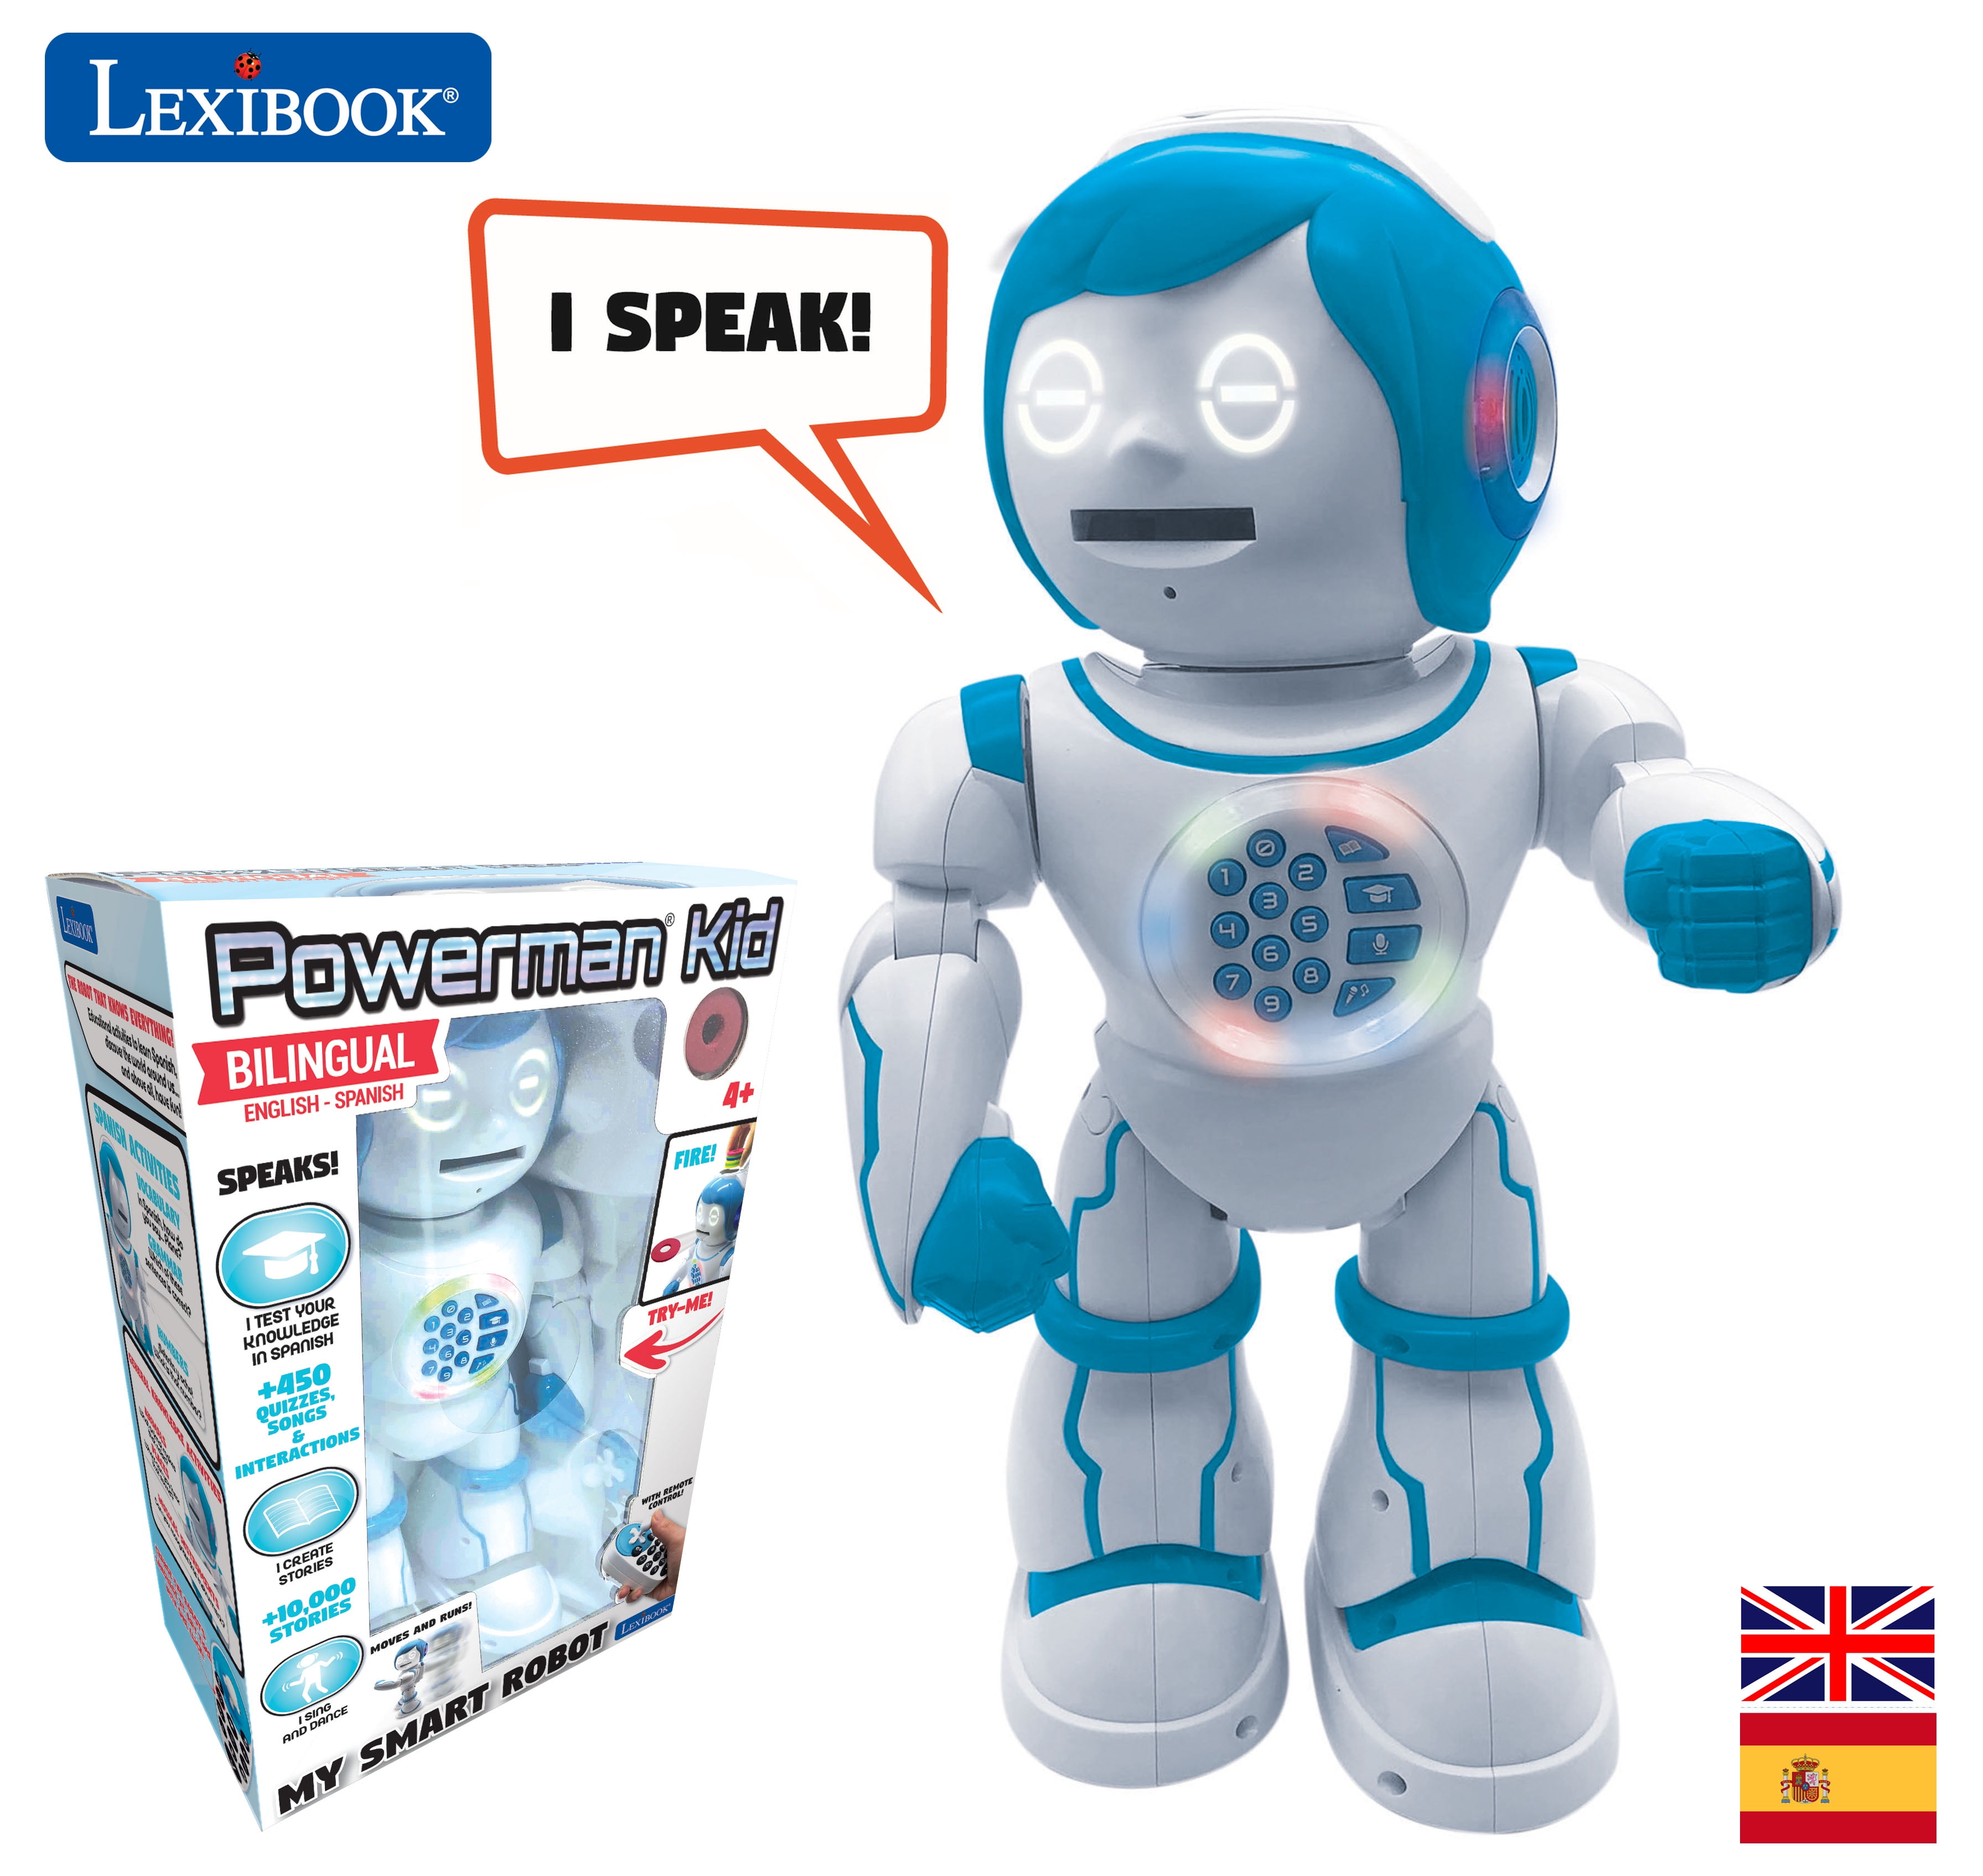 Lexibook - Powerman Advance - Robot télécommandé - Jouet interactif